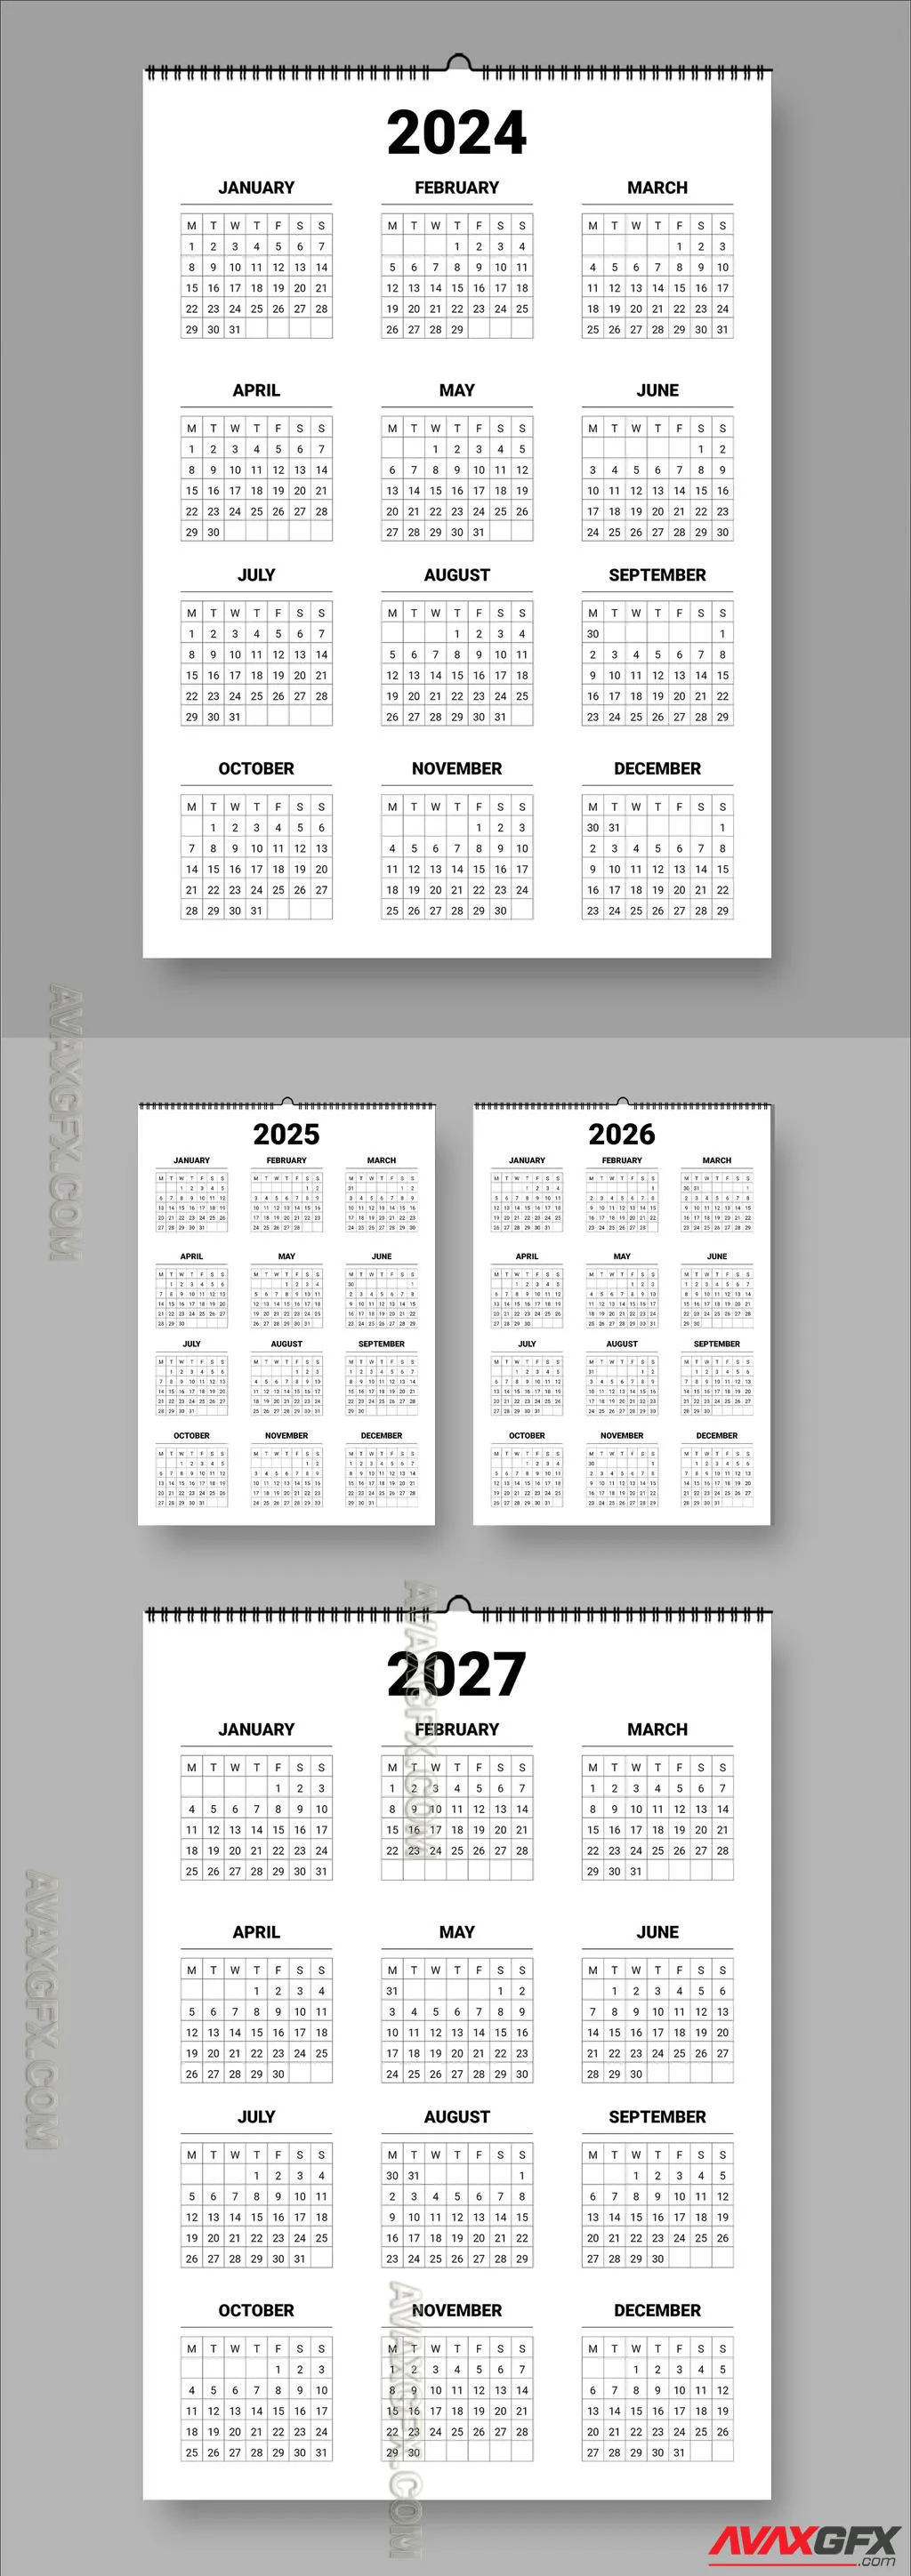 Adobestock - Wall Calendar 2024 to 2027 675810803